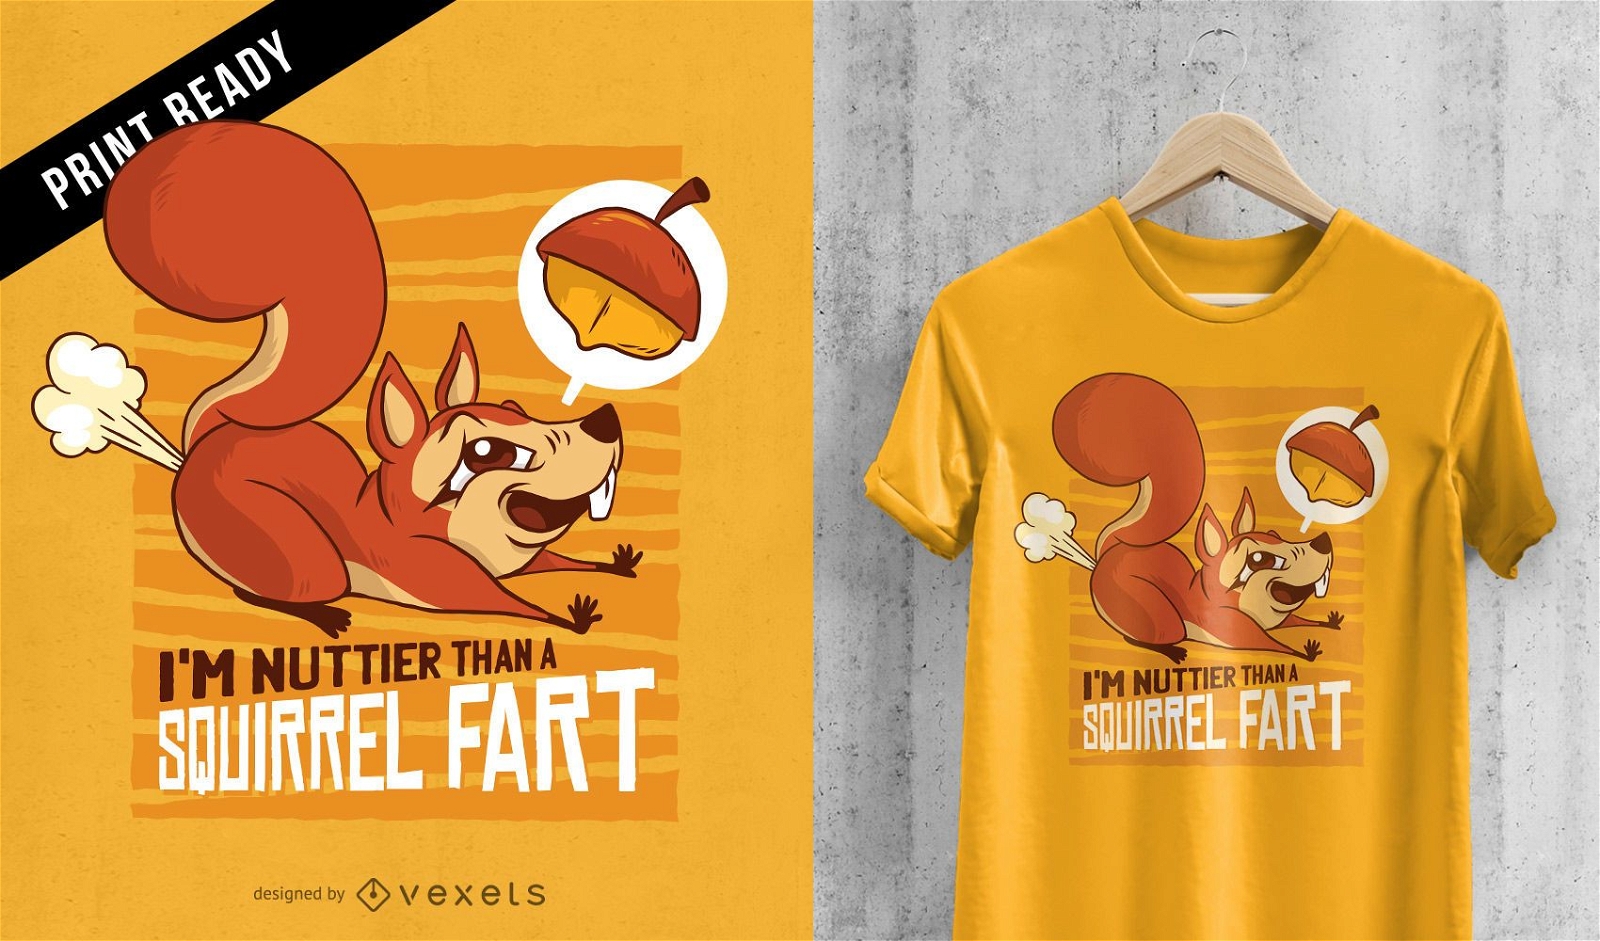 Squirrel Fart Funny T-shirt Design